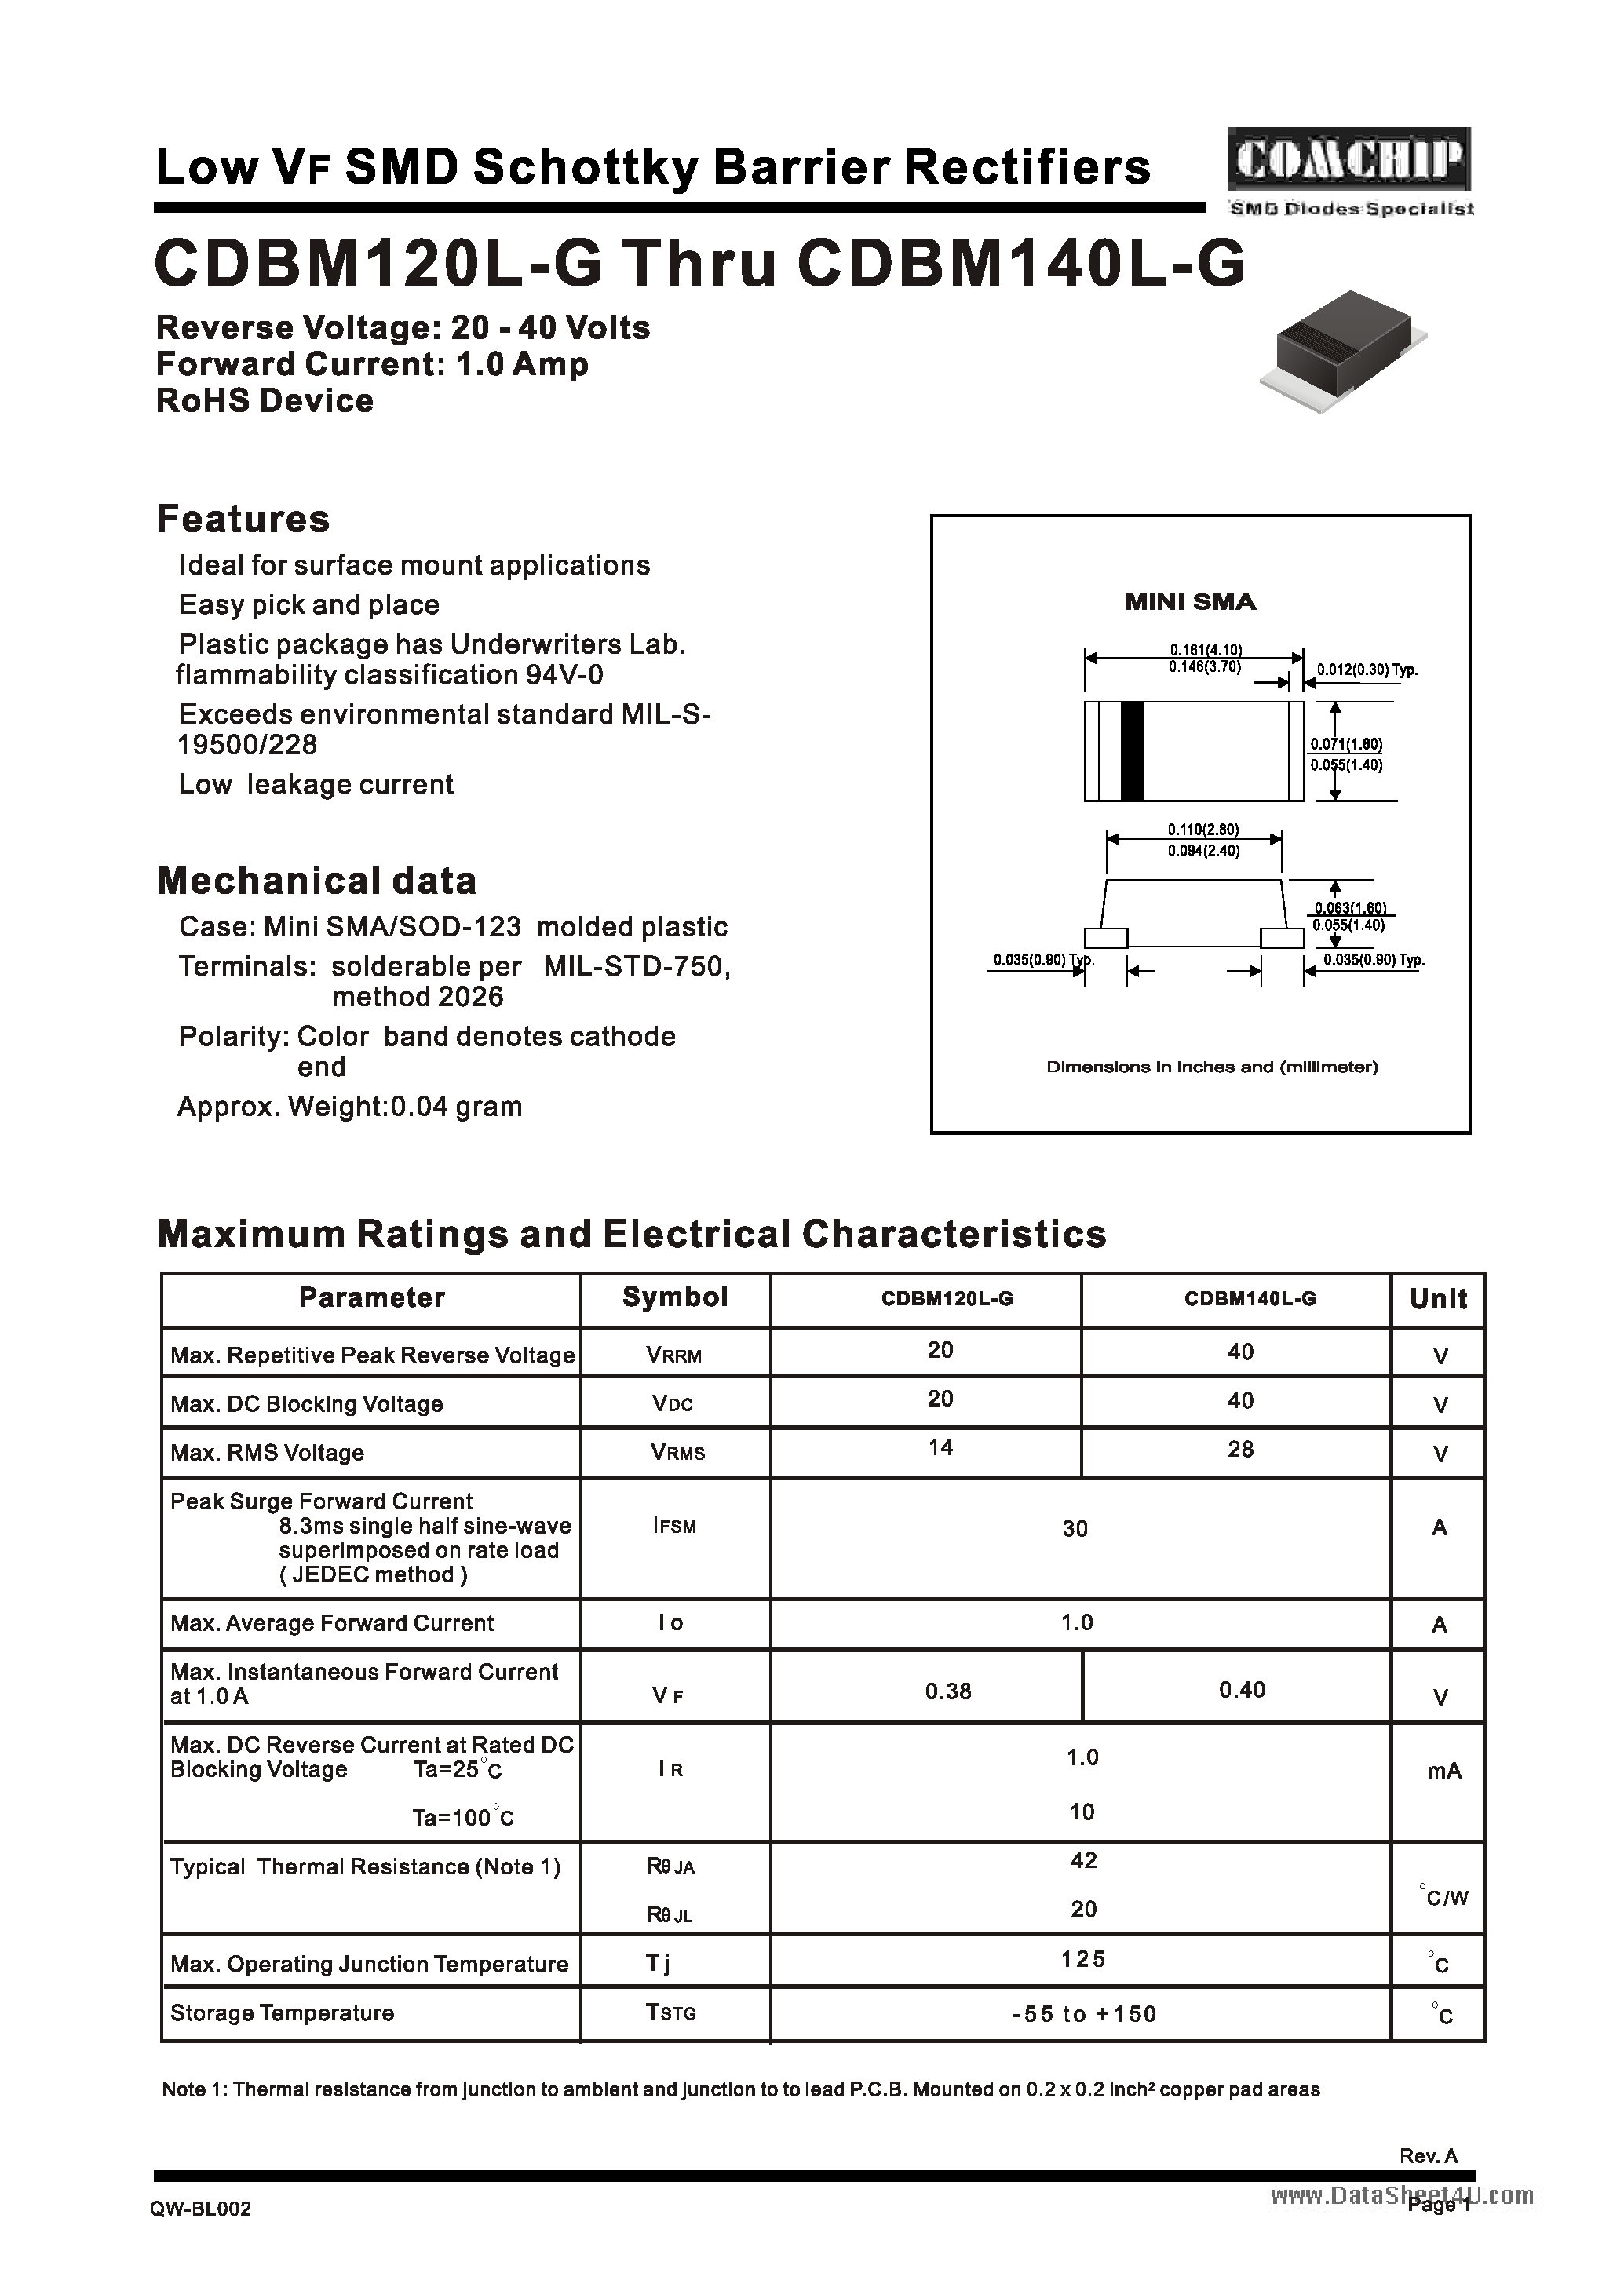 Datasheet CDBM120L-G - (CDBM120L-G / CDBM140L-G) Low VF SMD Schottky Barrier Rectifier page 1